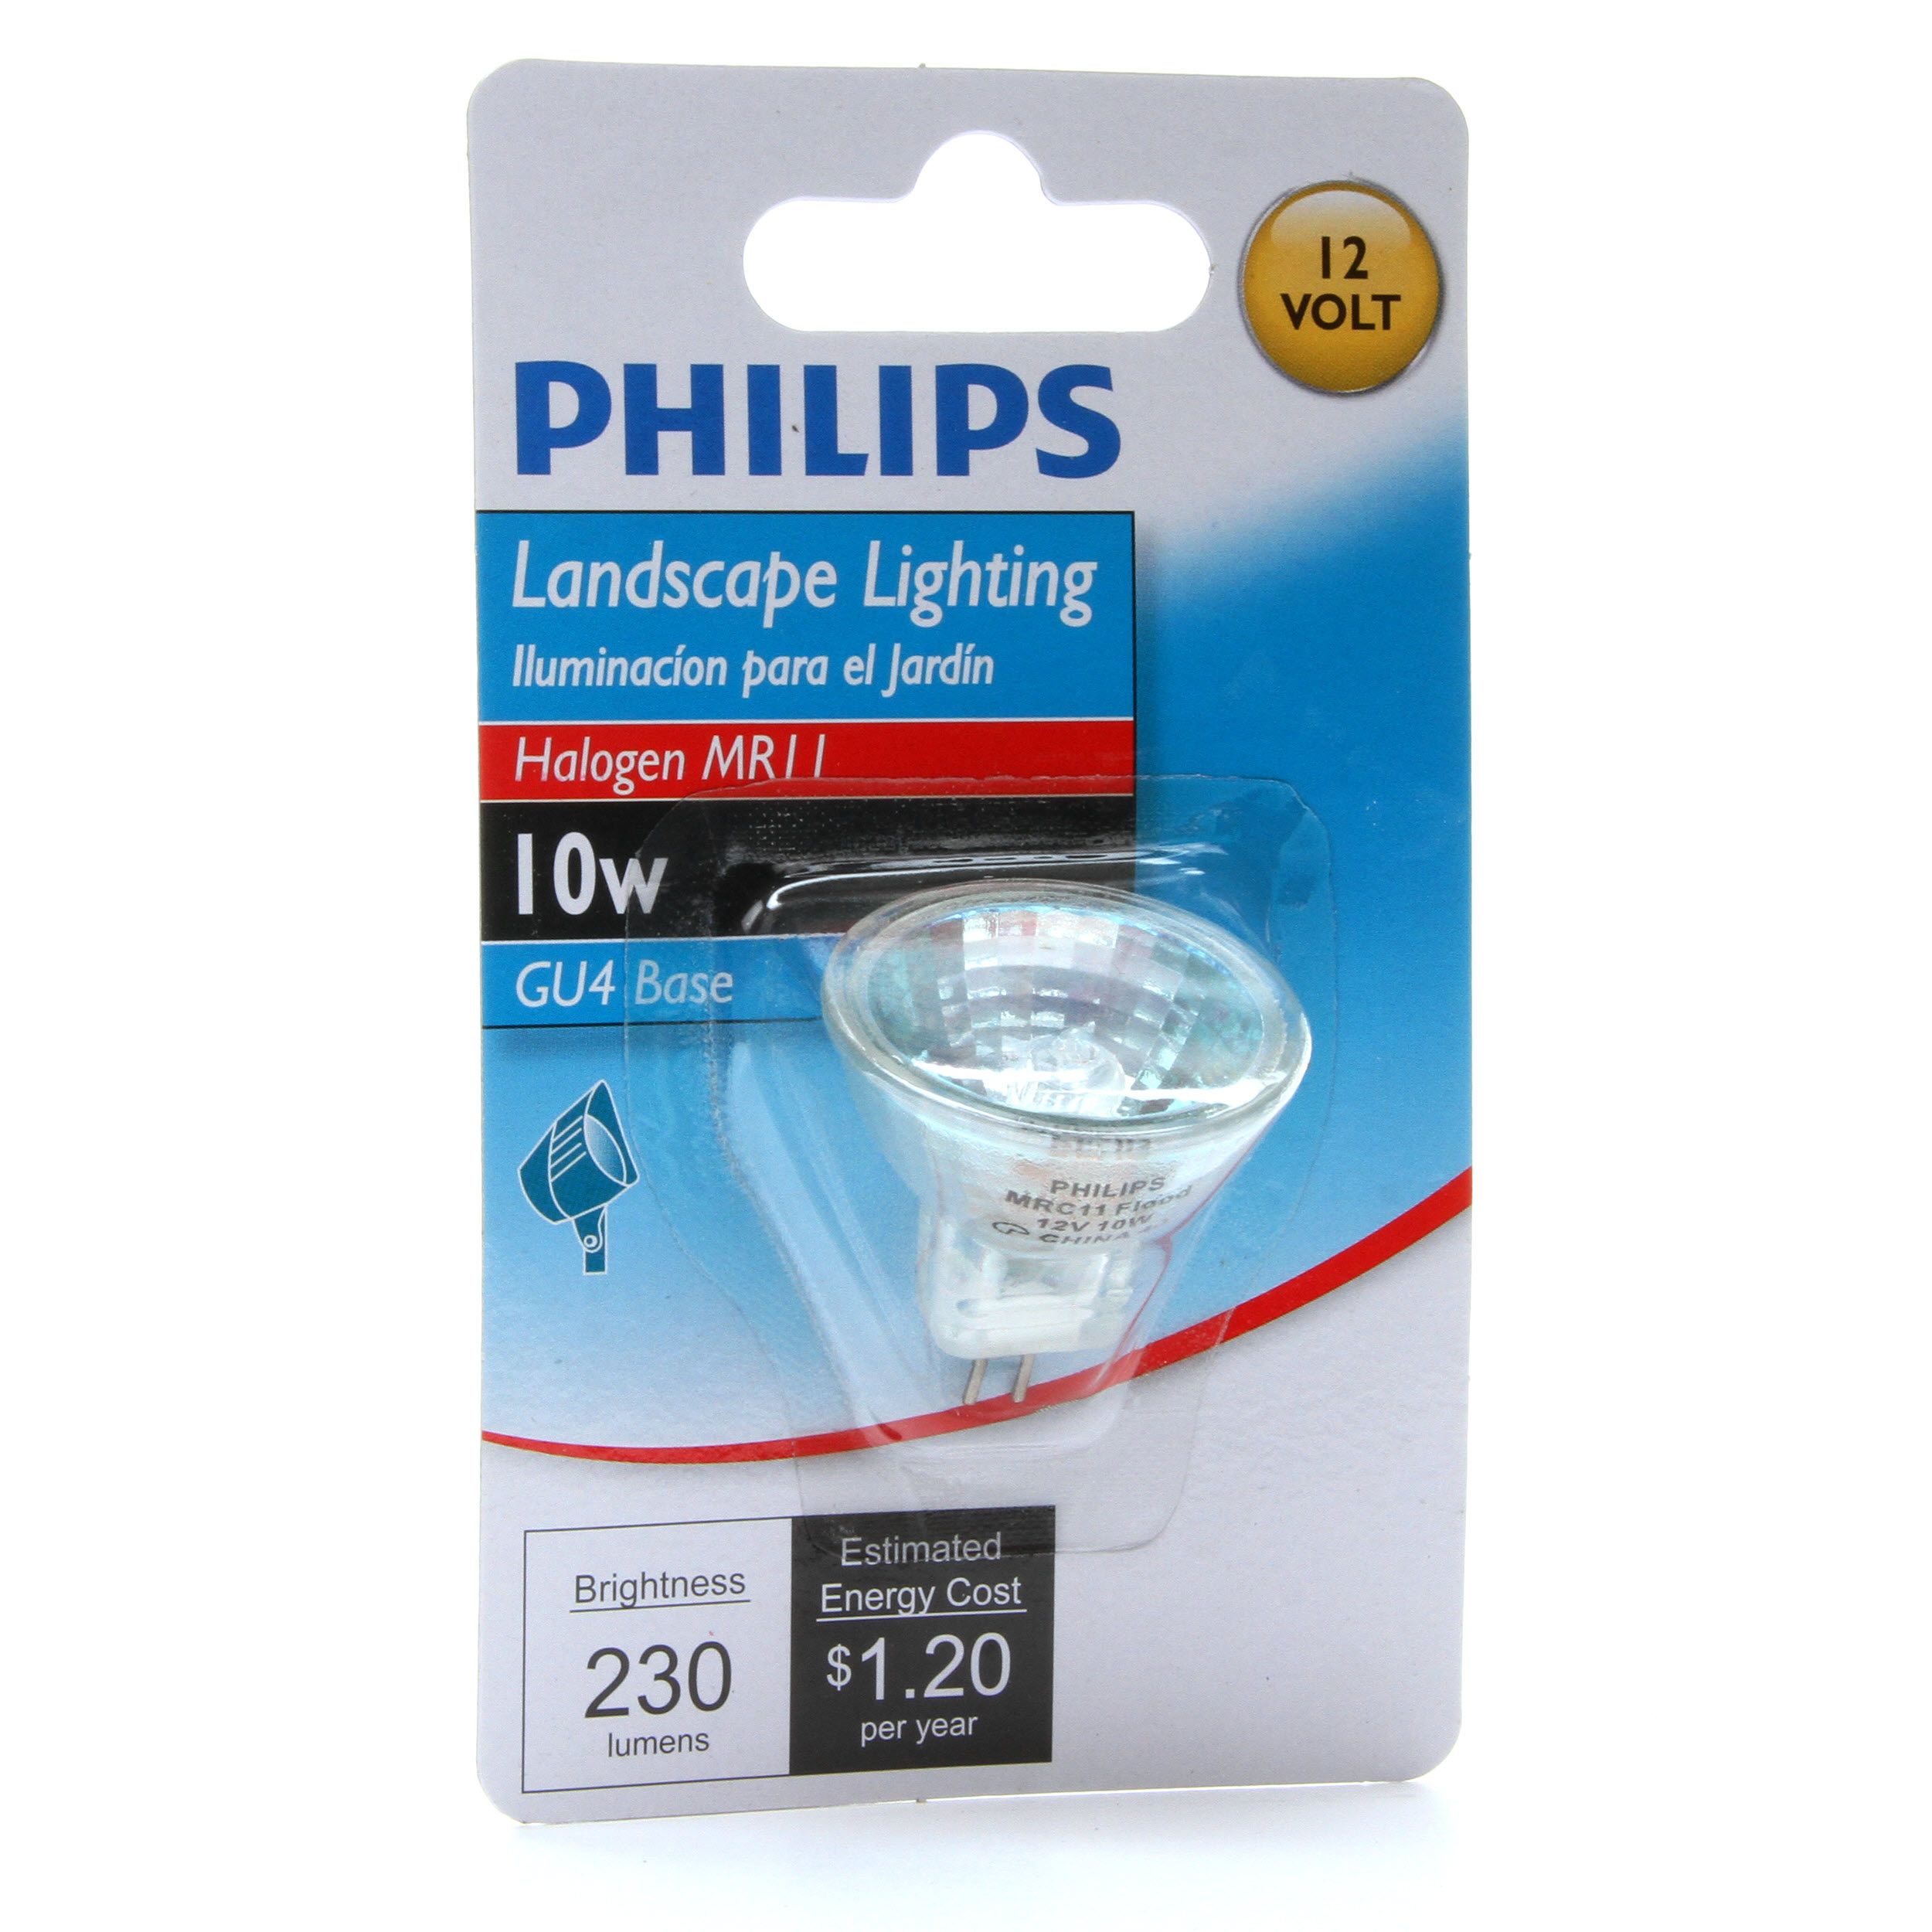 Philips 156760 Landscape Lighting 20-Watt 12-Volt MR11